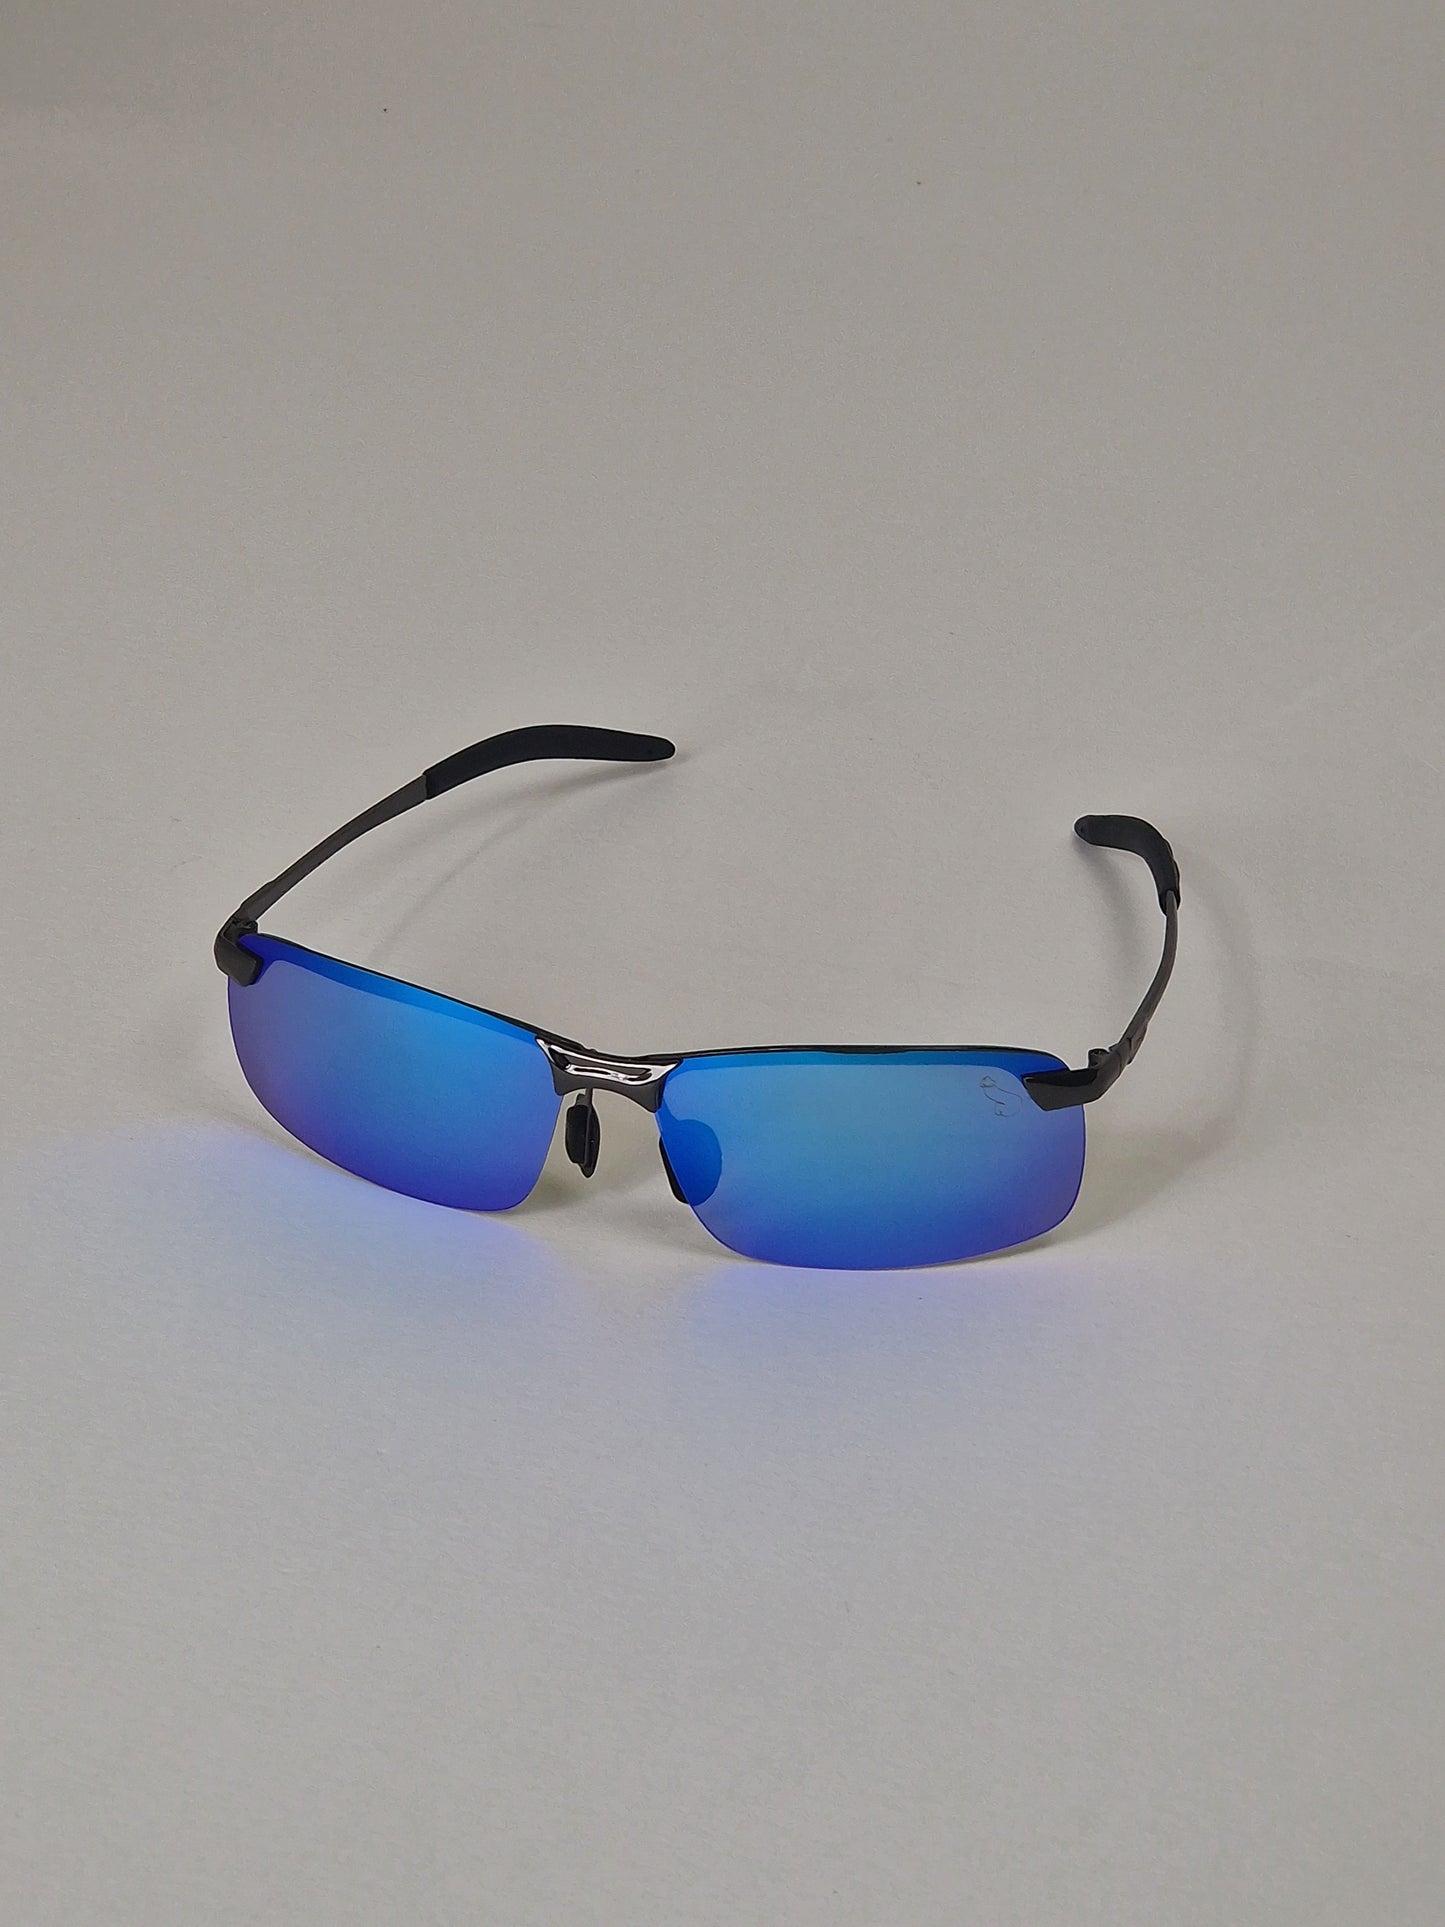 Sunglasses, model 40 - Blue tinted